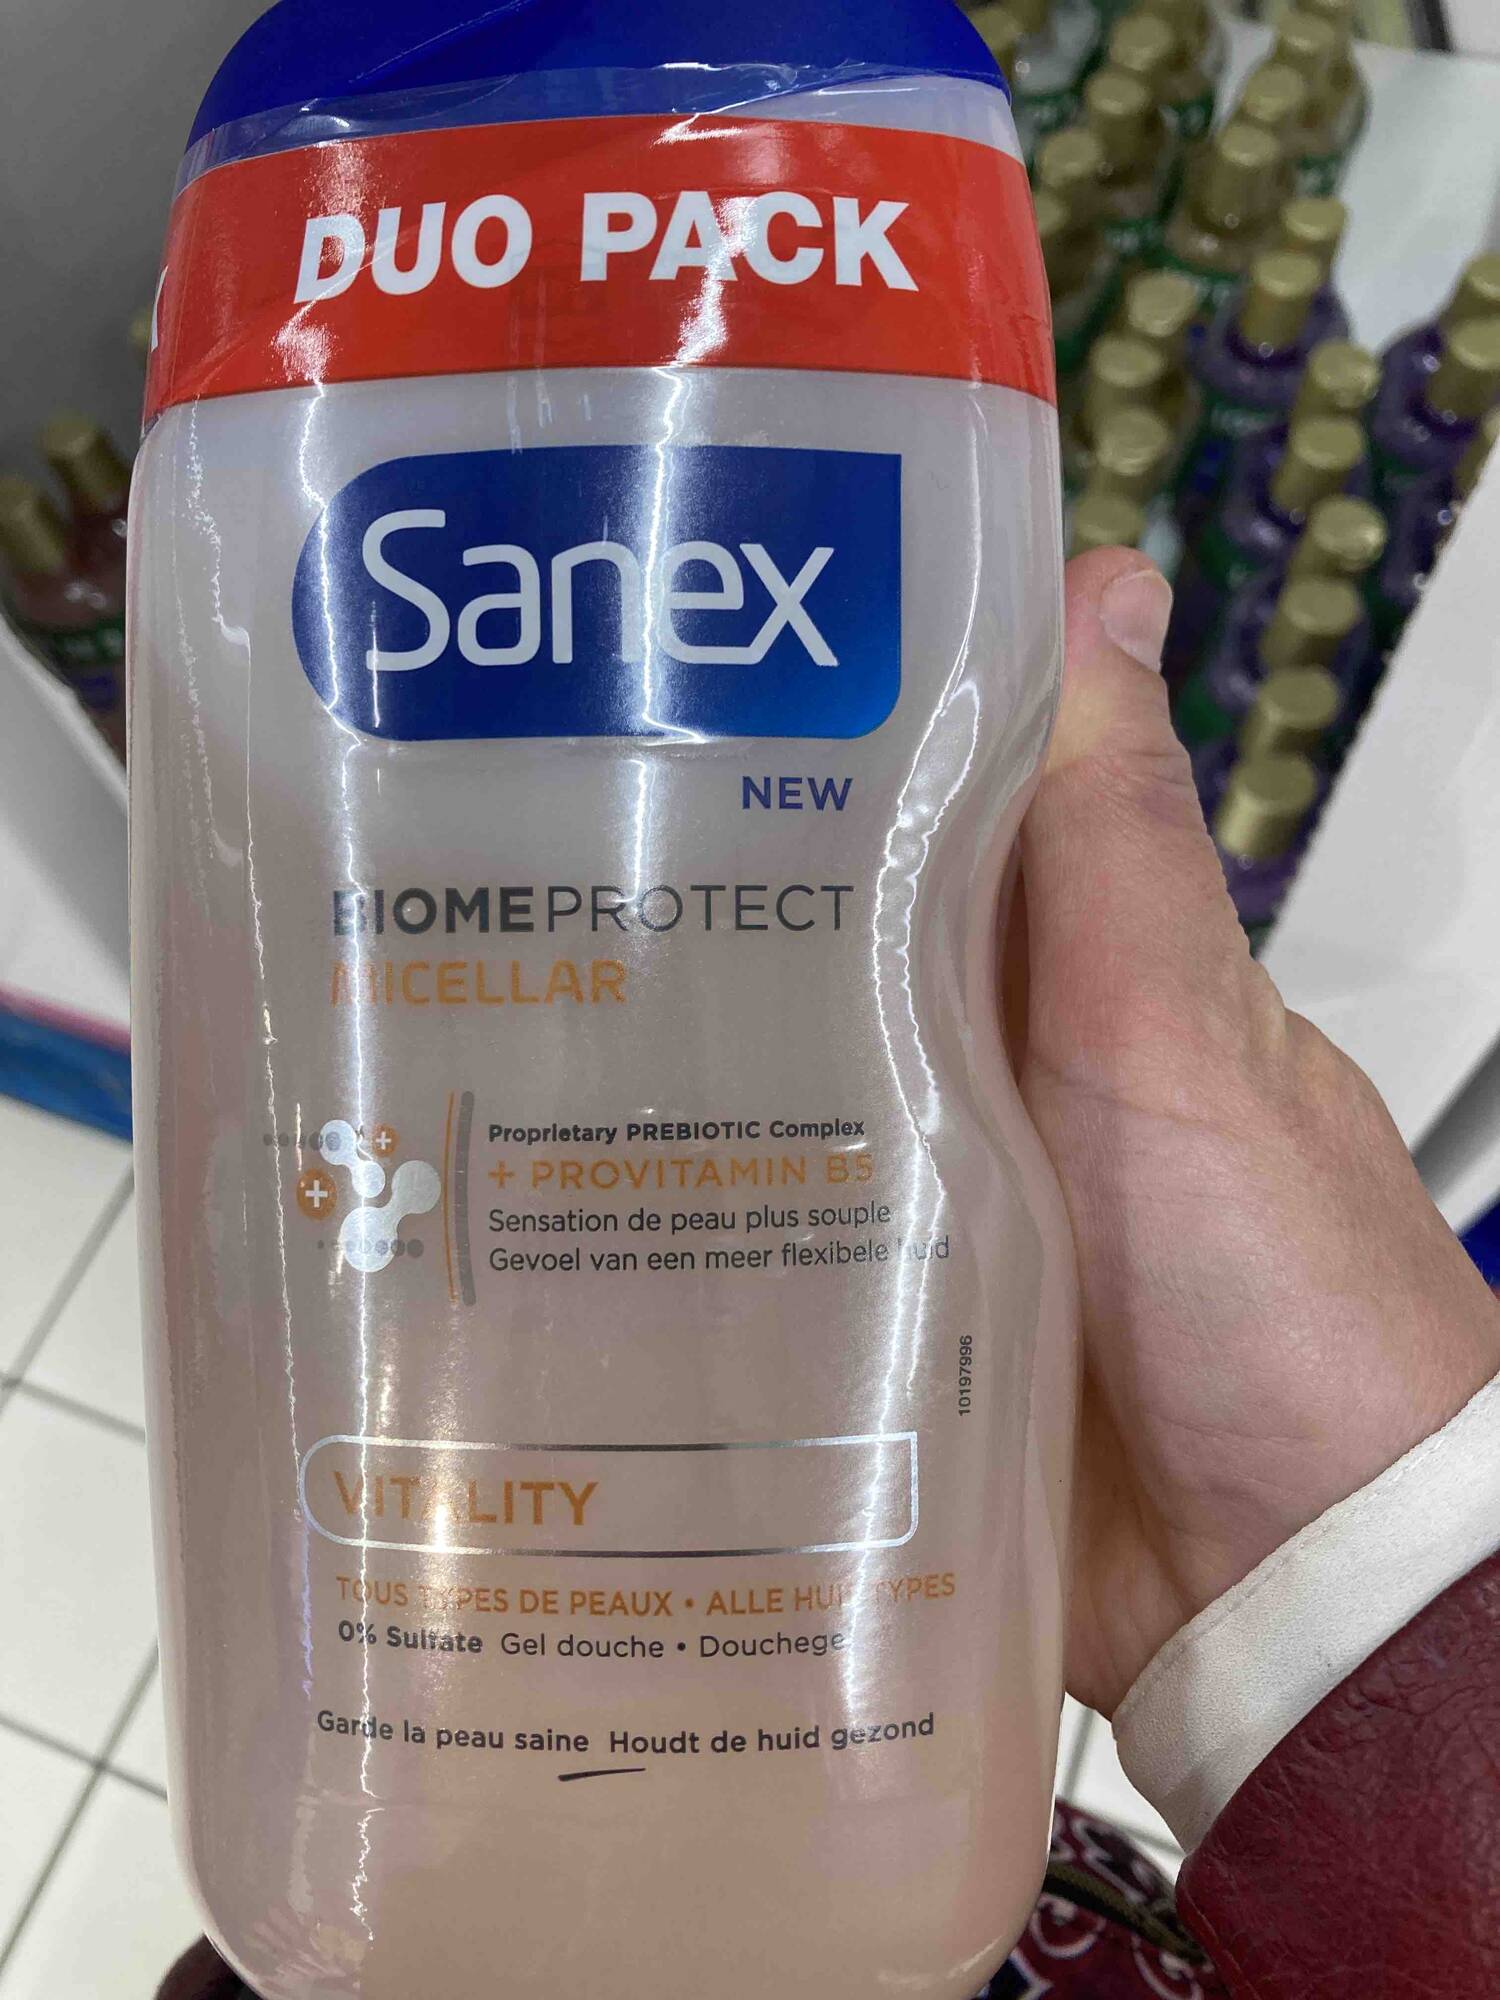 SANEX - Biomeprotect micellar vitality - Gel douche